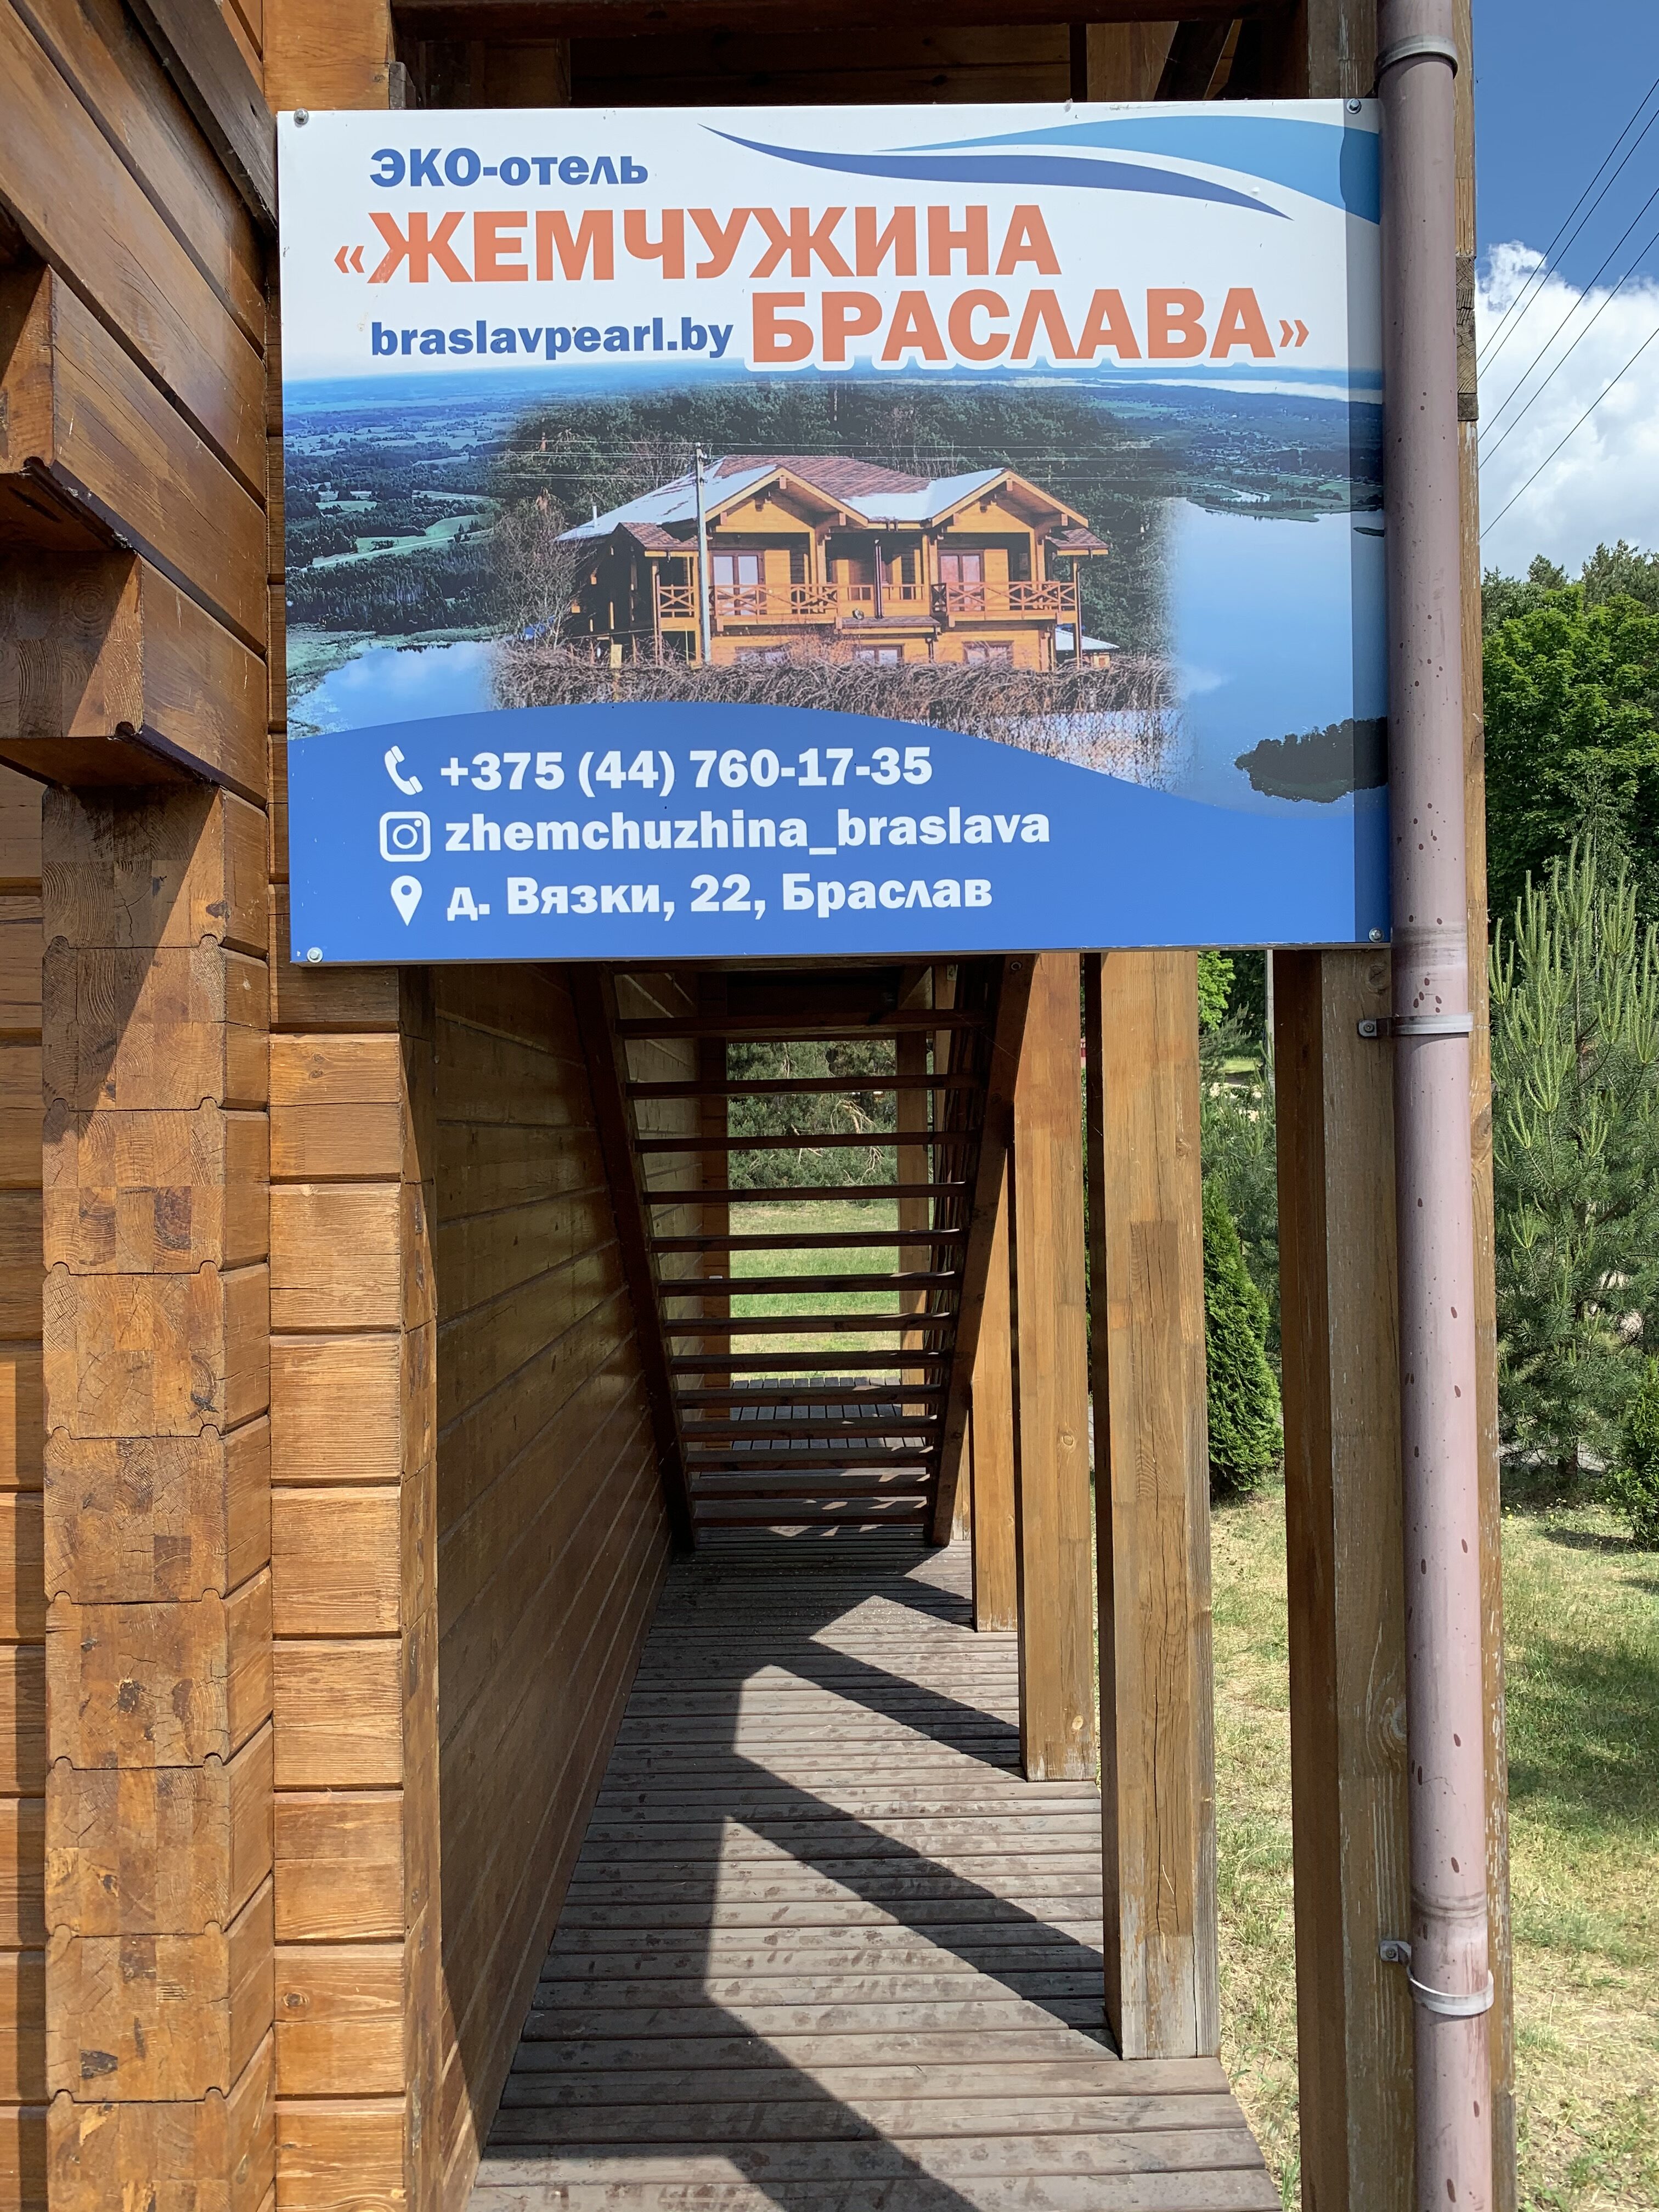 IMG 8462 rotated - ЭКО-отель "Жемчужина Браслава"